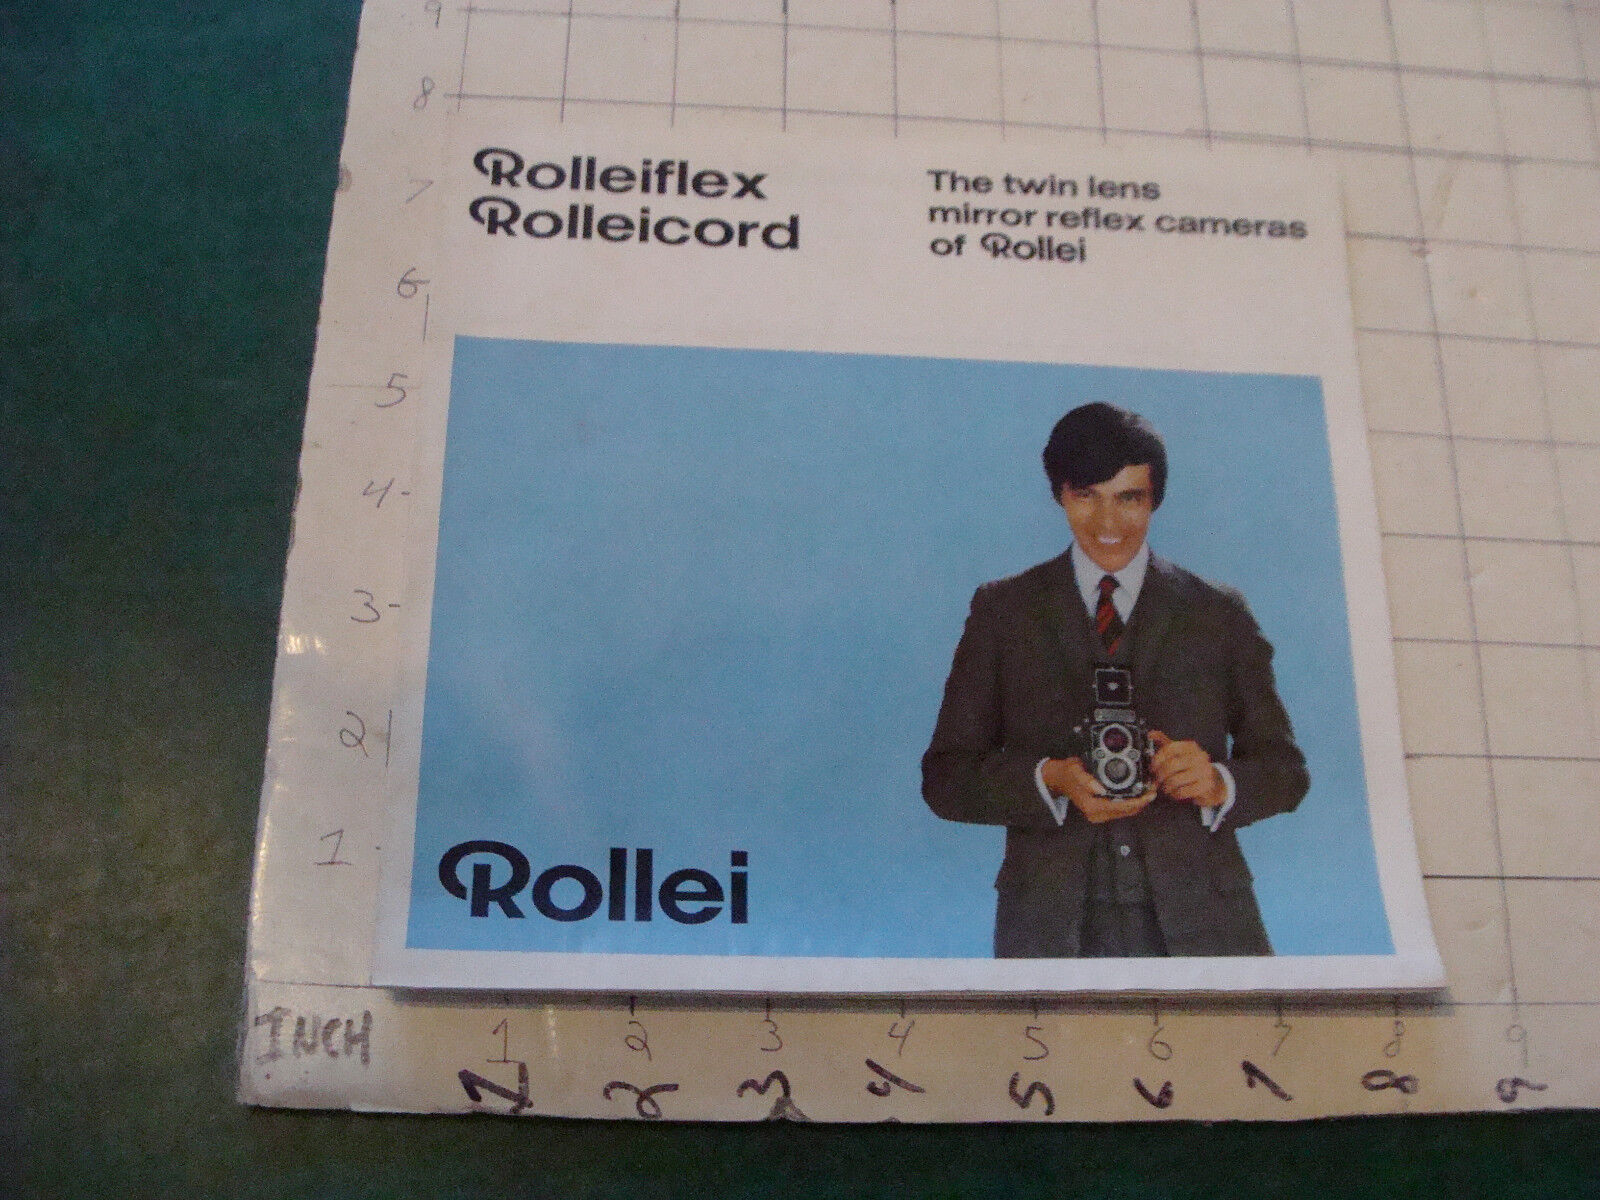 Original CAMERA Booklet: ROLLEIFLEX ROLLEICORD ROLLEI 1970, 12pgs worn edge